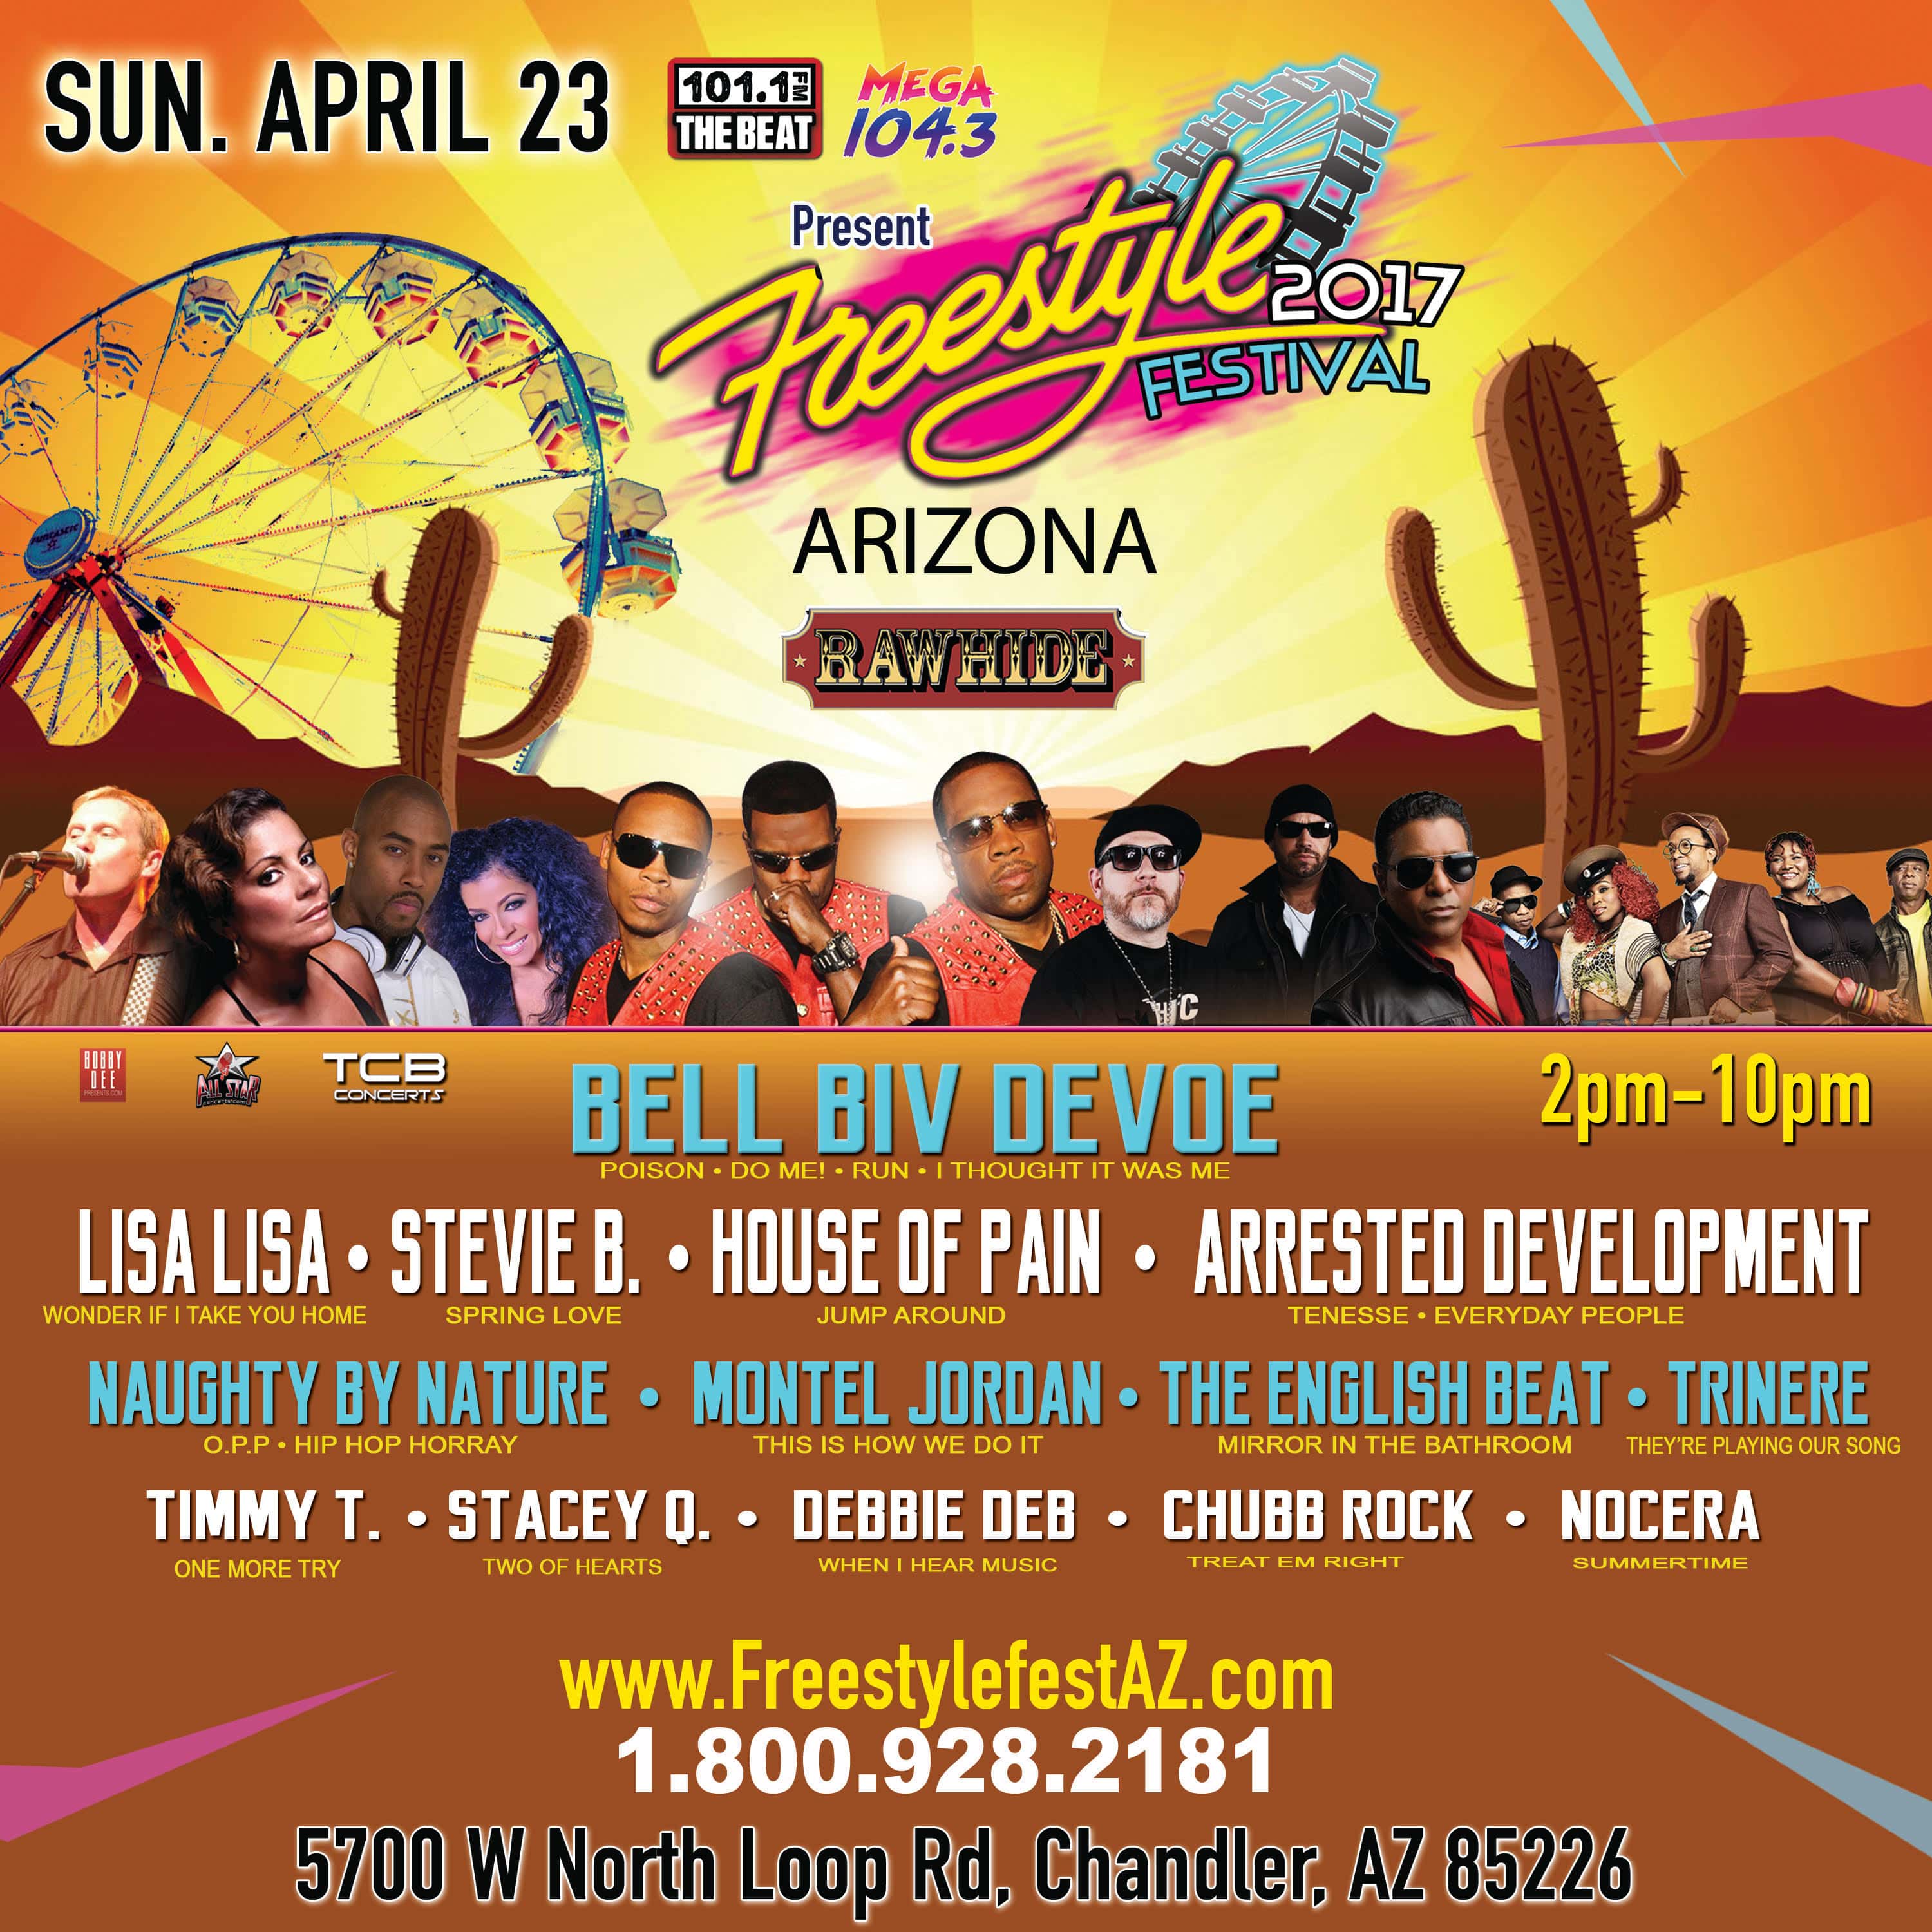 Arizona Freestyle Festival 2017 Mega 104.3